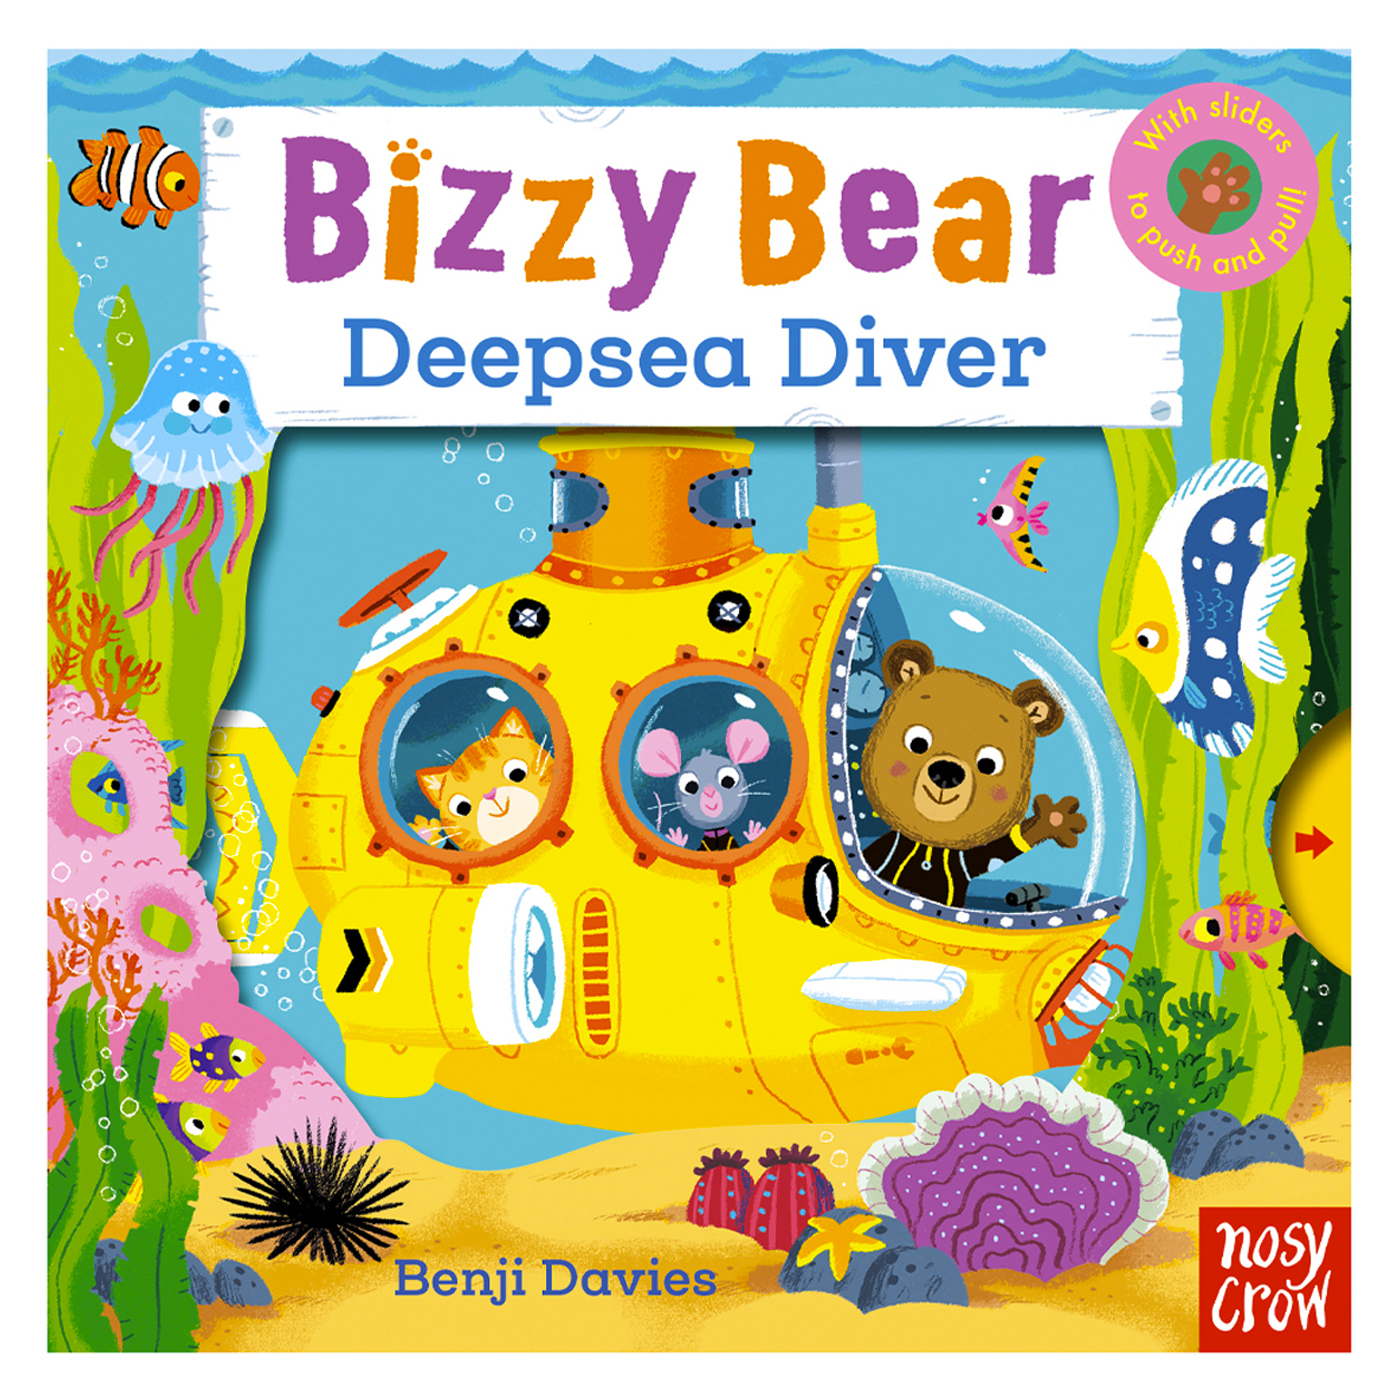  Bizzy Bear: Deepsea Driver